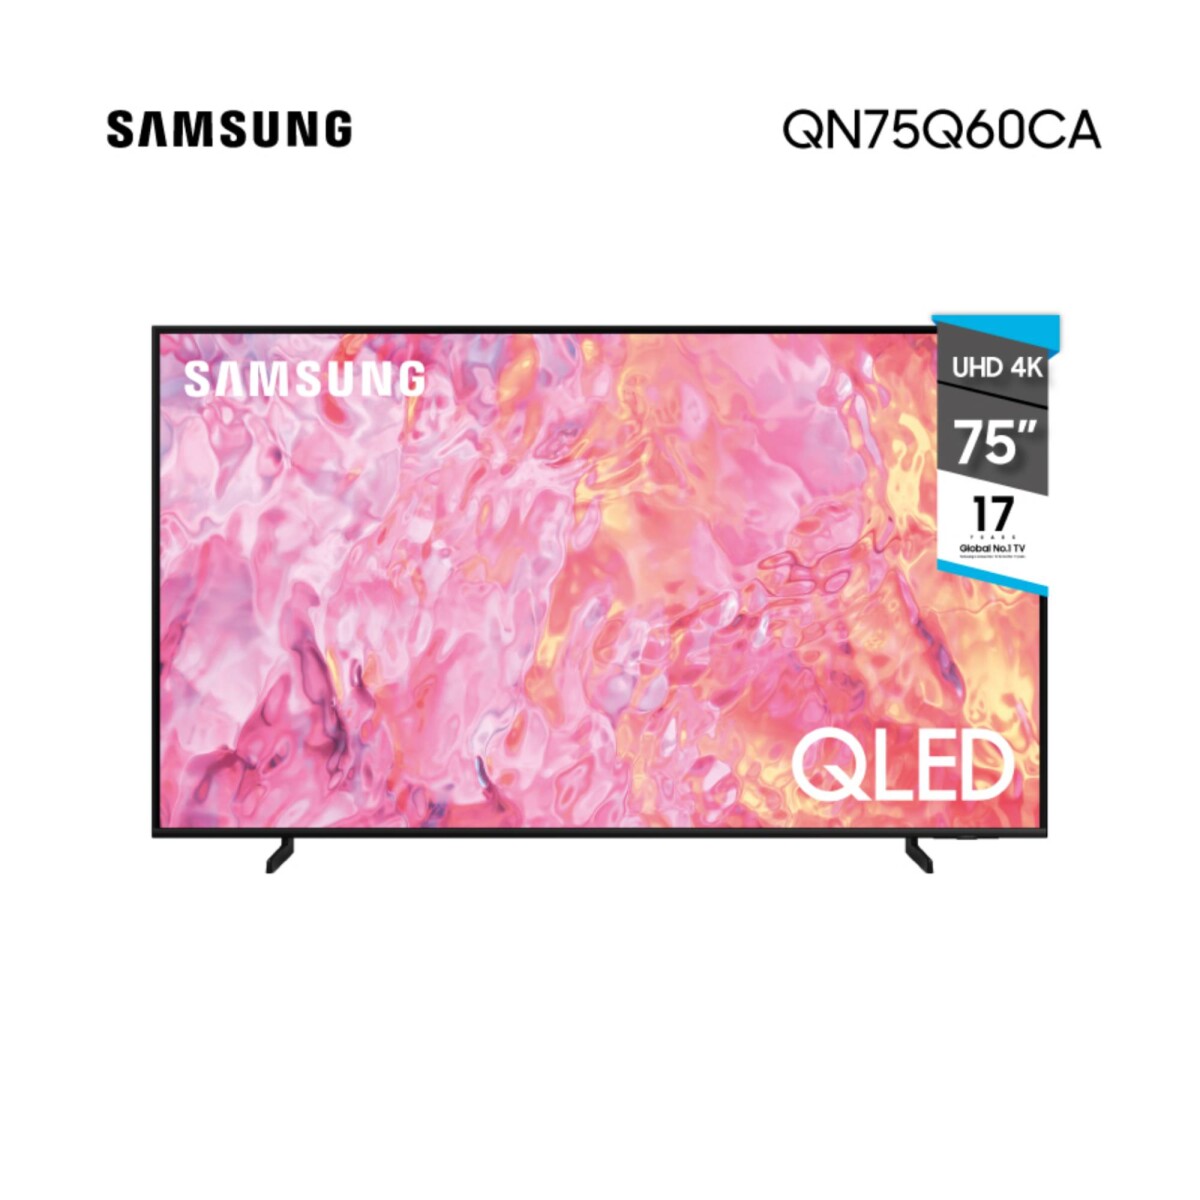 Smart TV Samsung QLED 75" UHD 4K - QN75Q60CA 